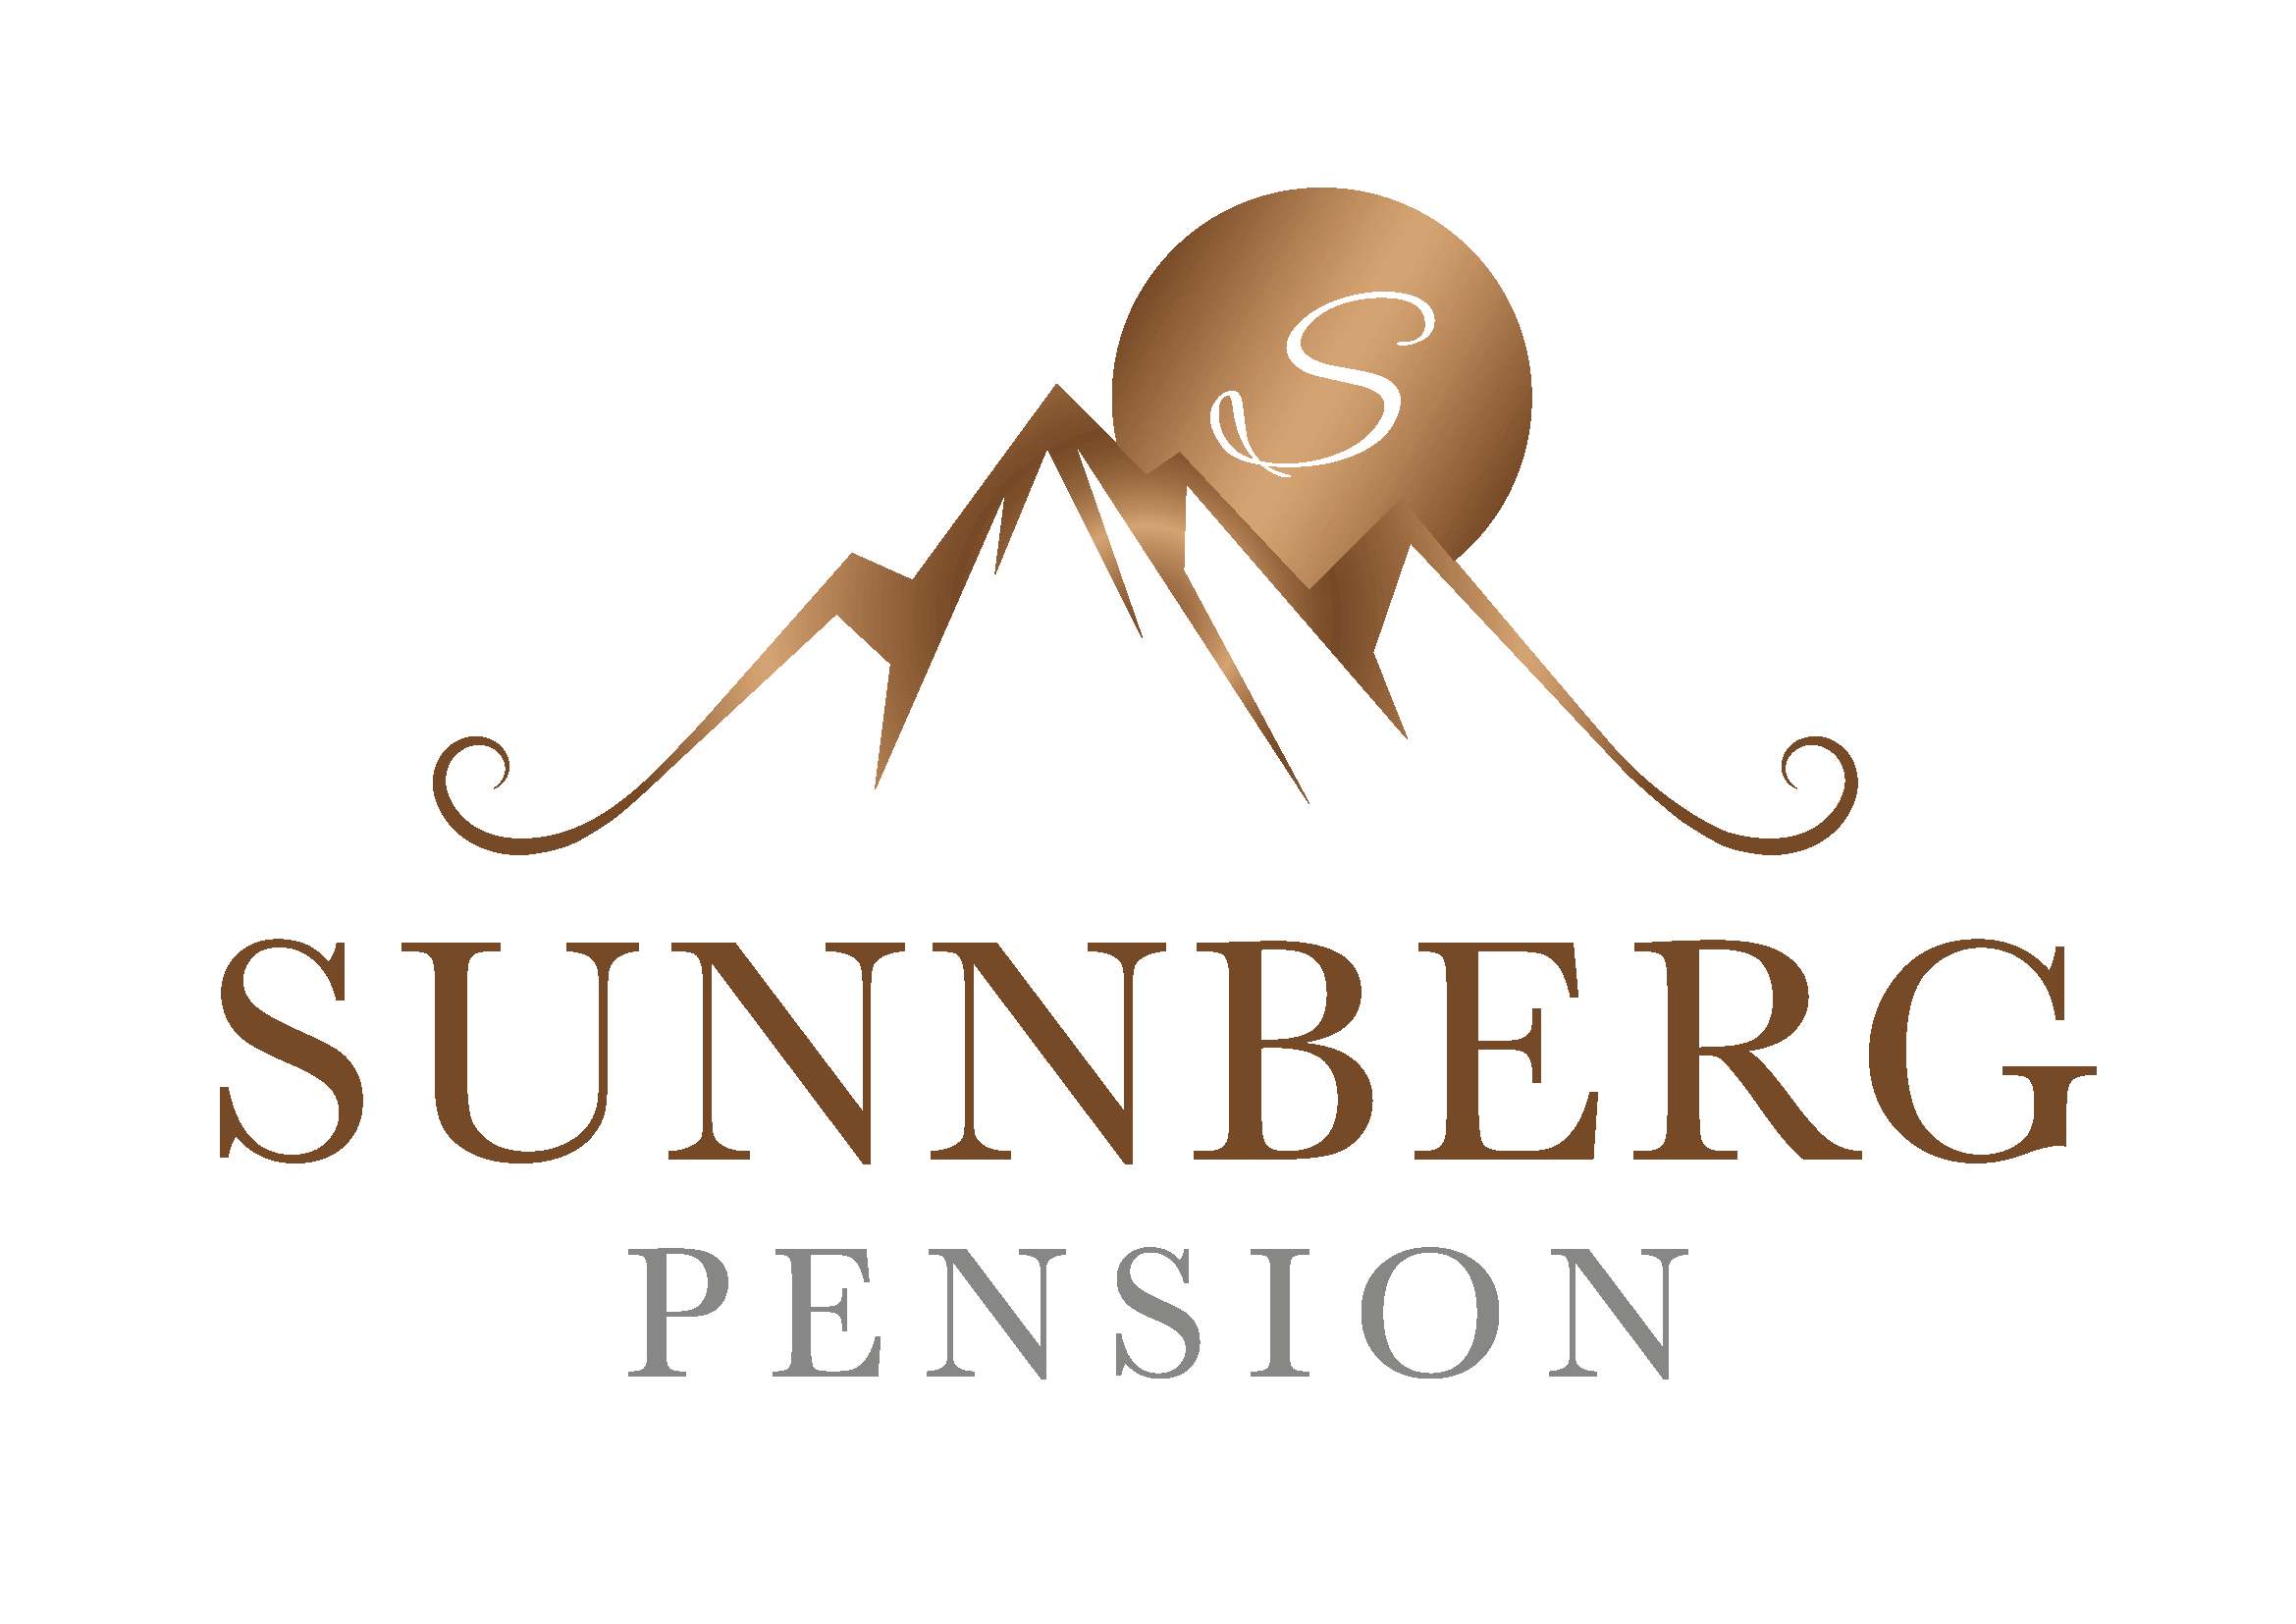 Pension Sunnberg 2019